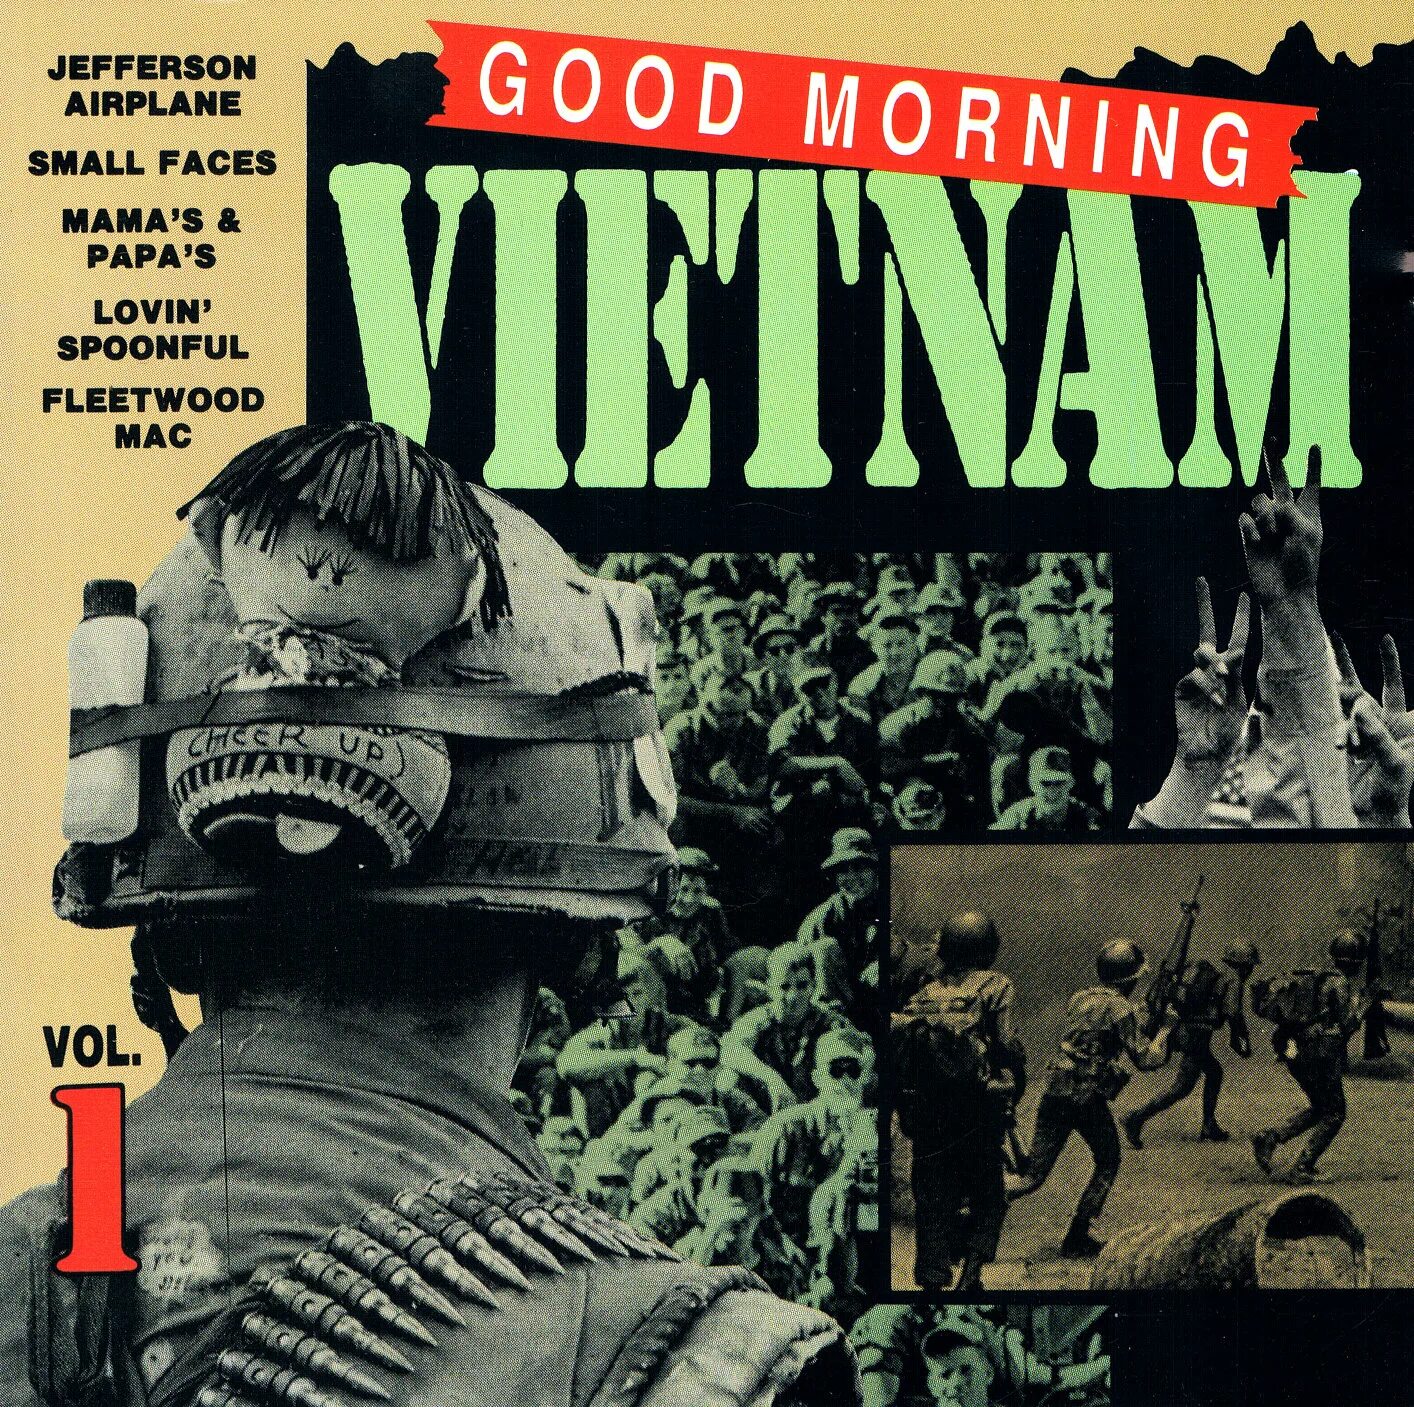 Good morning vietnam black. Jefferson Airplane. Good morning Vietnam. Good morning Vietnam песня. Good morning Vietnam Black Sabbath.